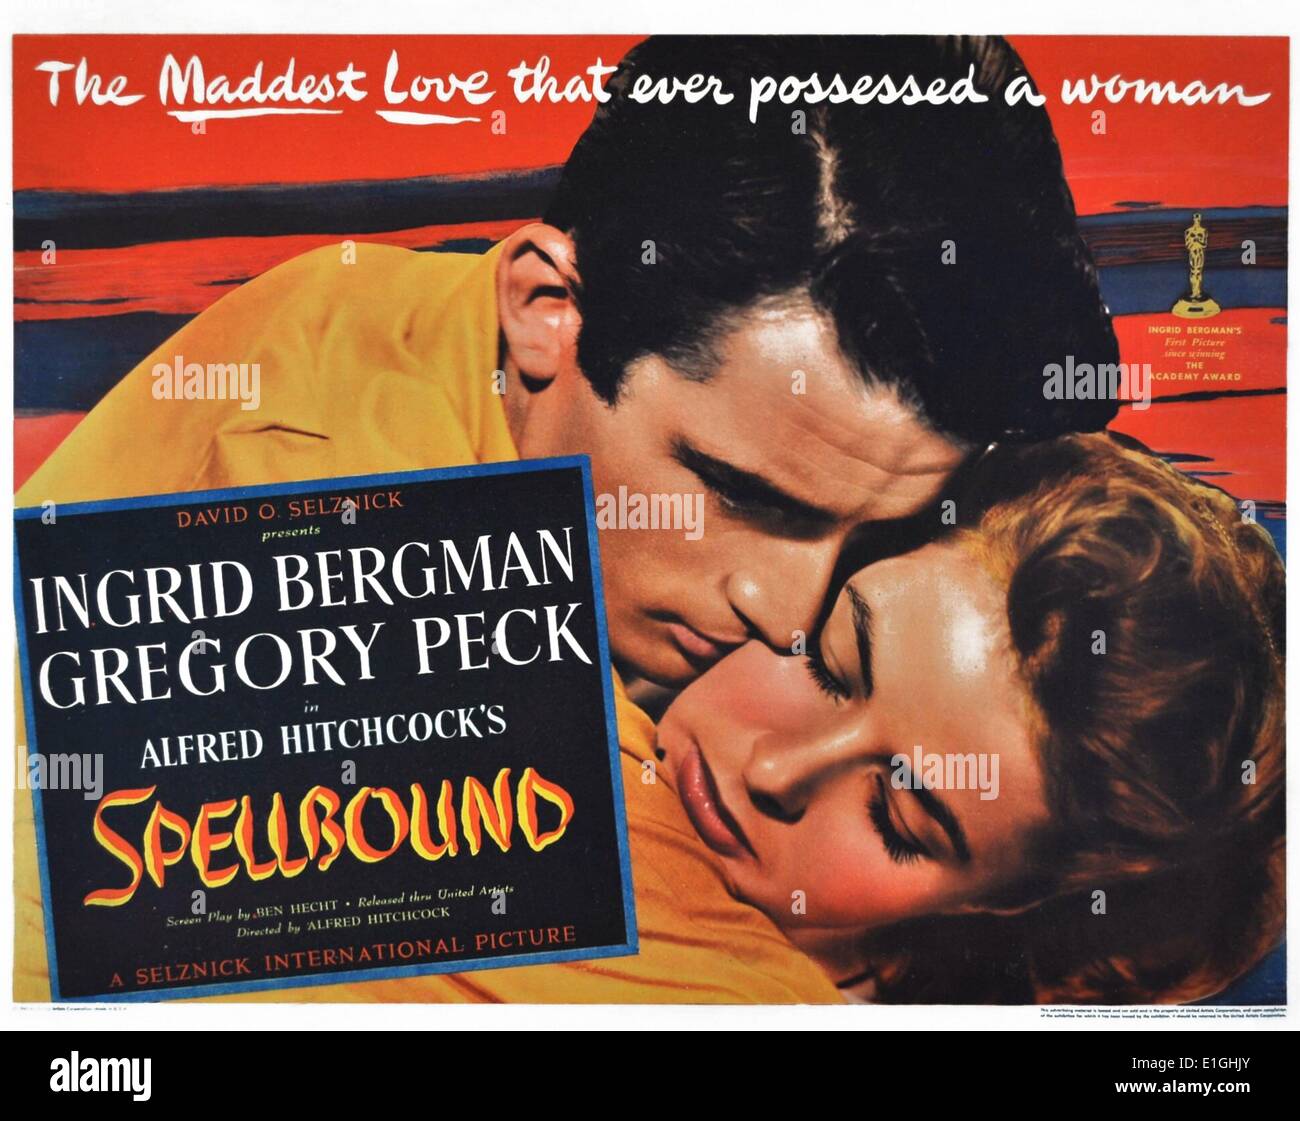 Spellbound a 1945 American Psychological mistero film thriller con protagonista Ingrid Bergman e Gregory Peck. Foto Stock